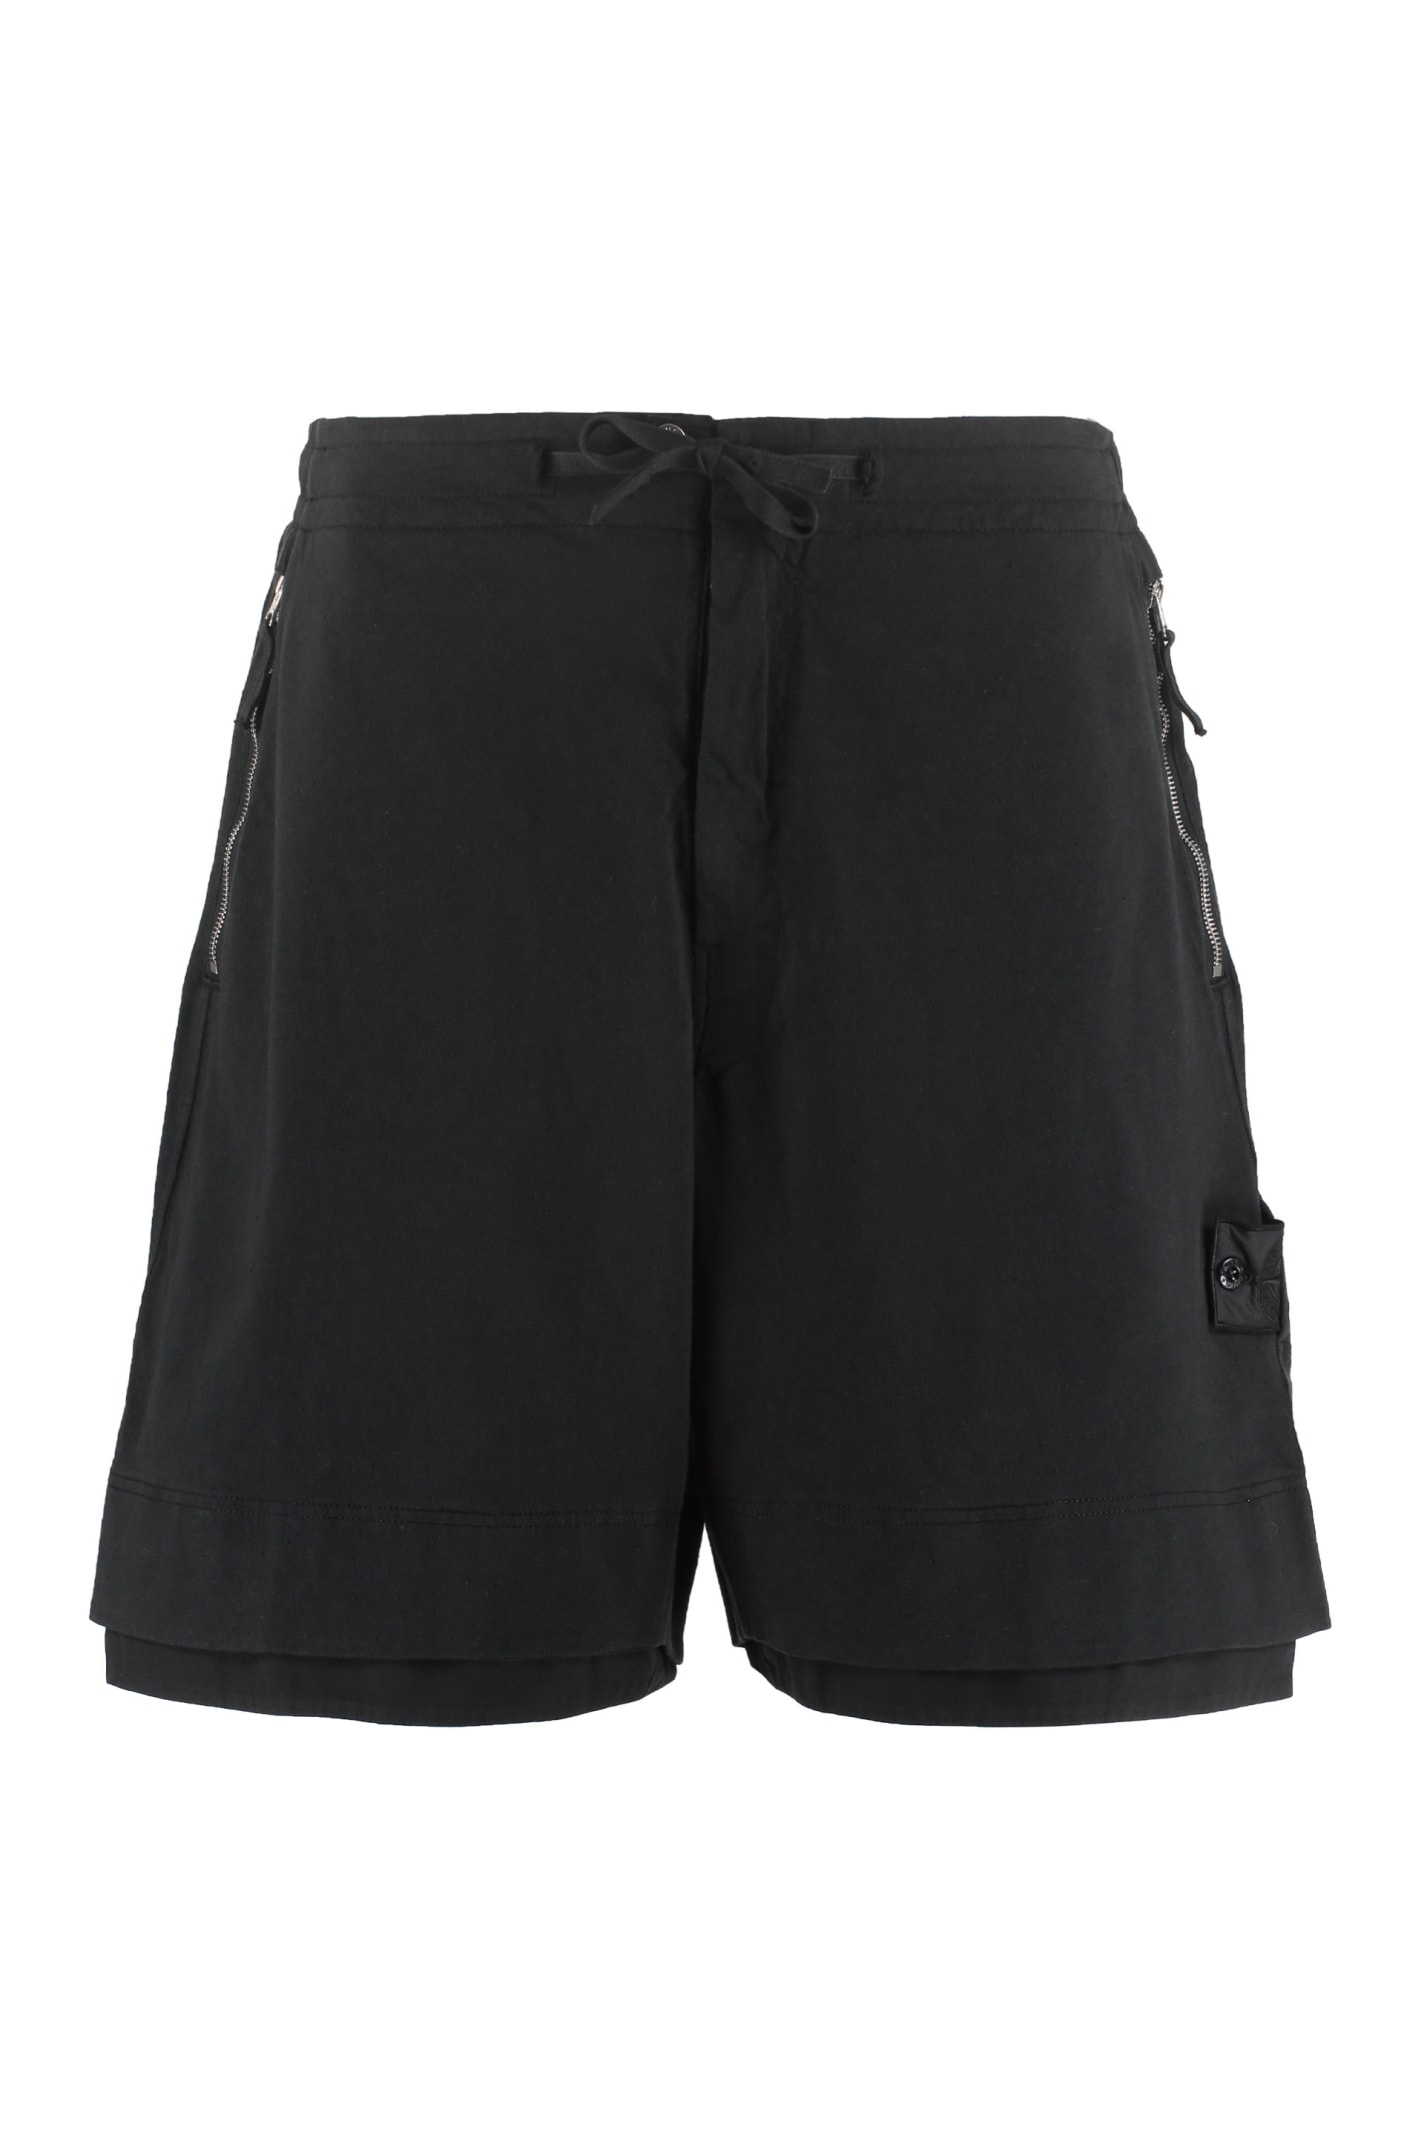 Stone Island Shadow Project Cotton Bermuda Shorts